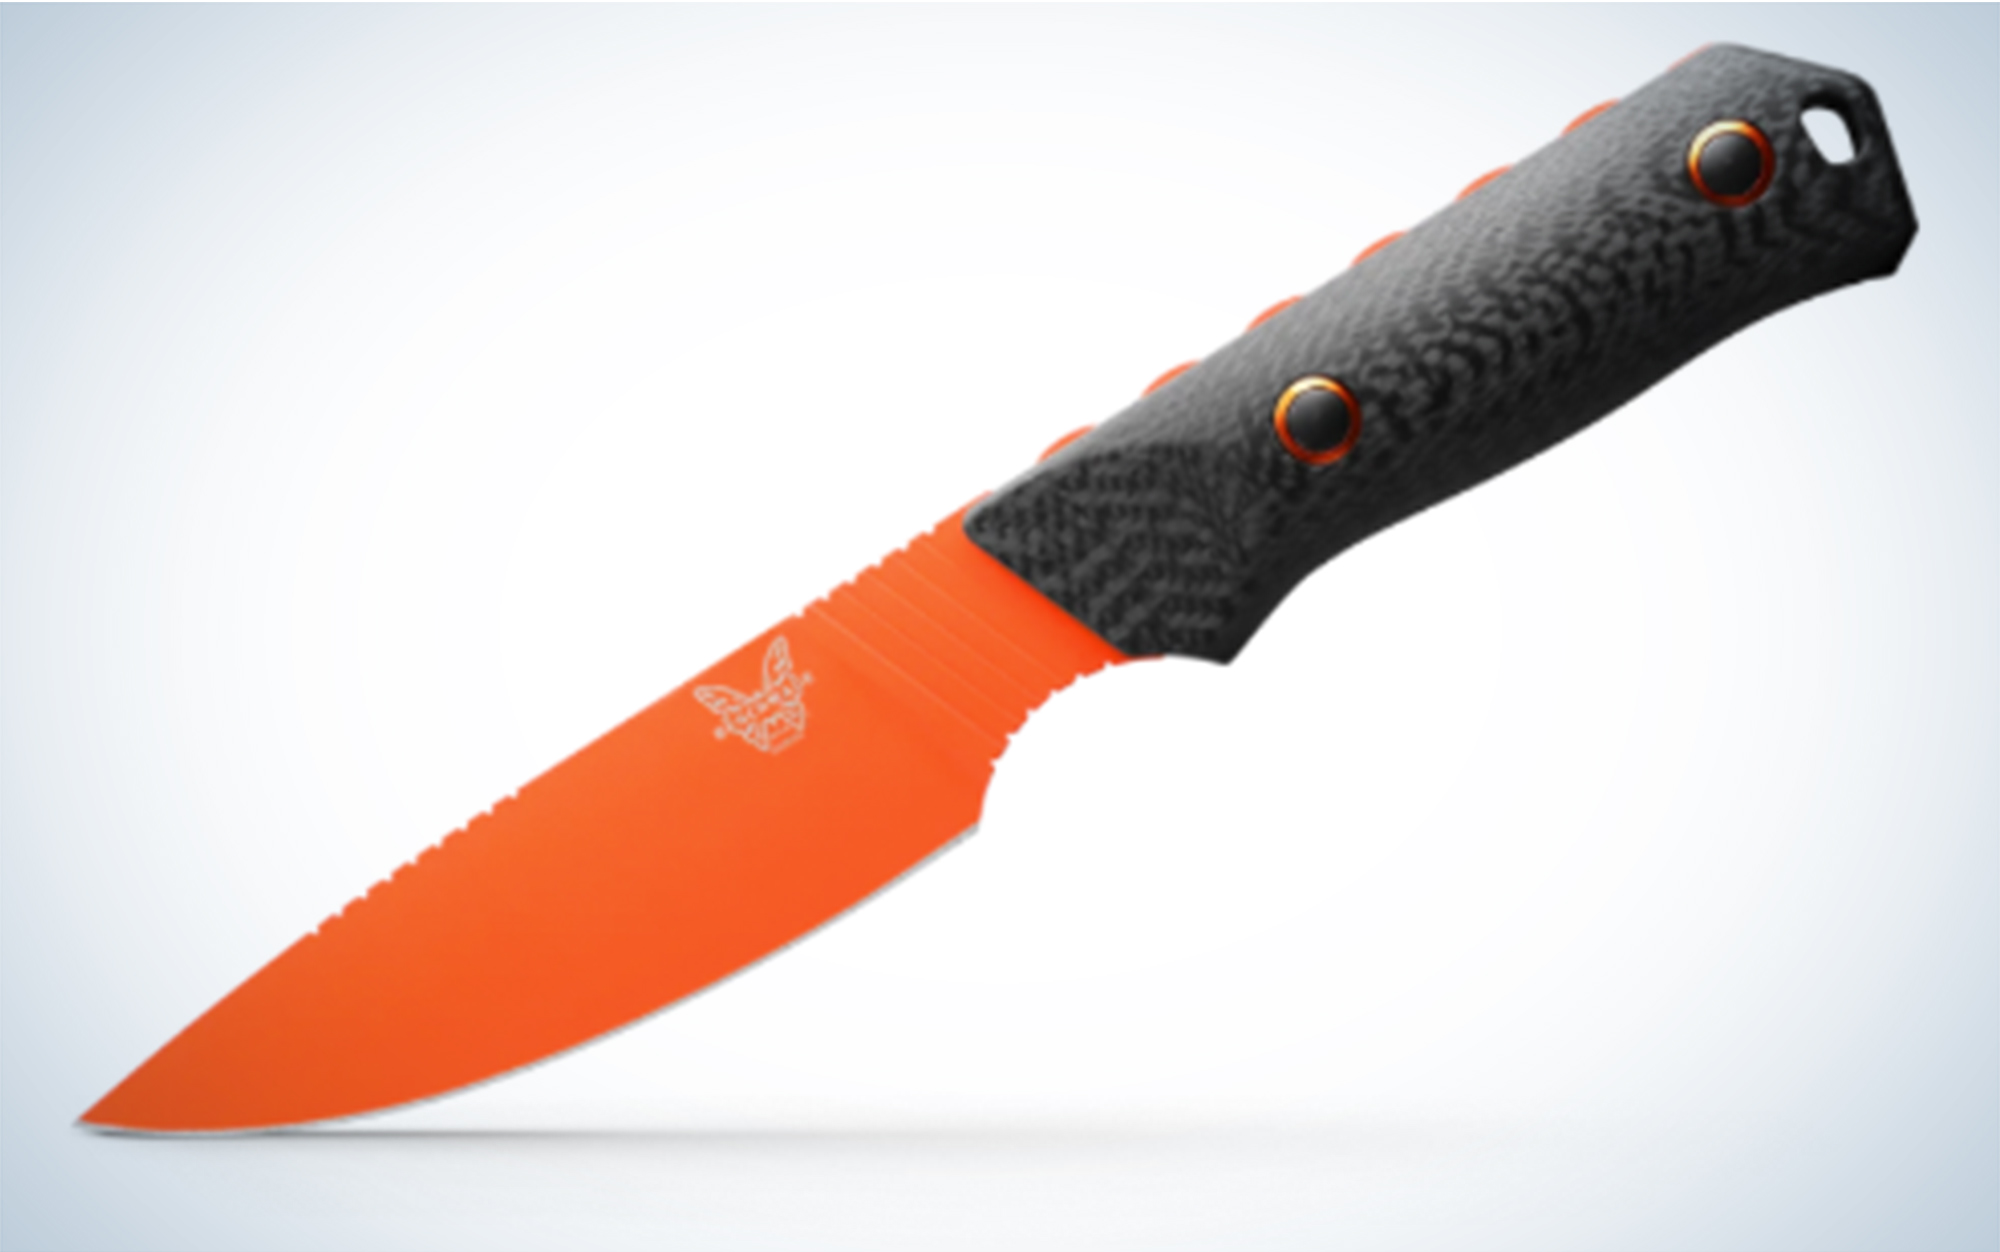 The Benchmade Raghorn Carbon Fiber is the best elk hunting knife.